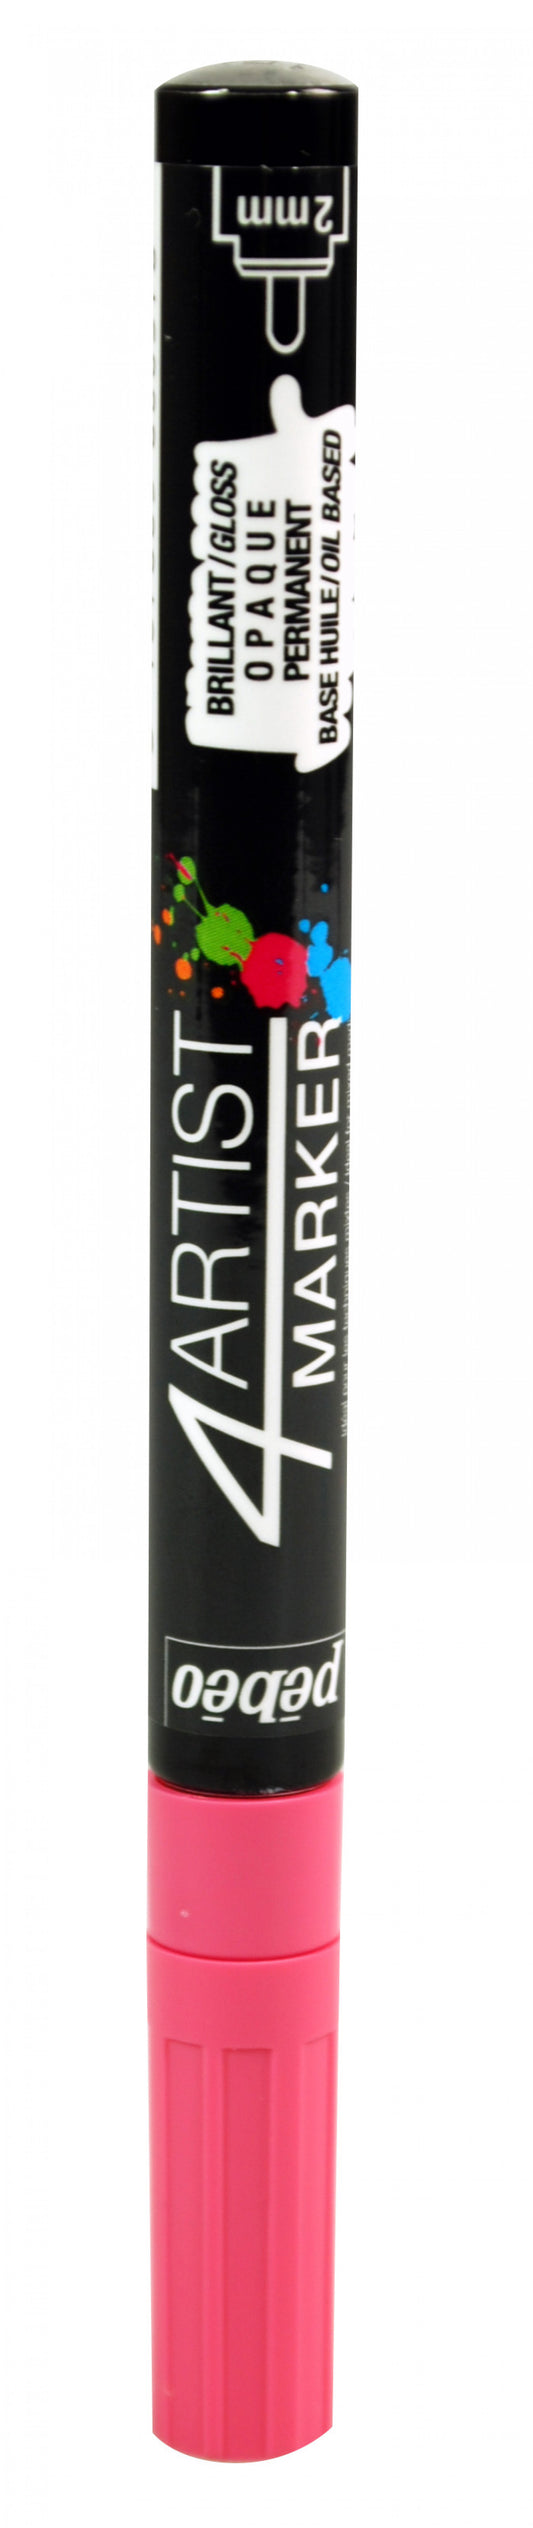 4Artist marker pen, 2mm tip, pink